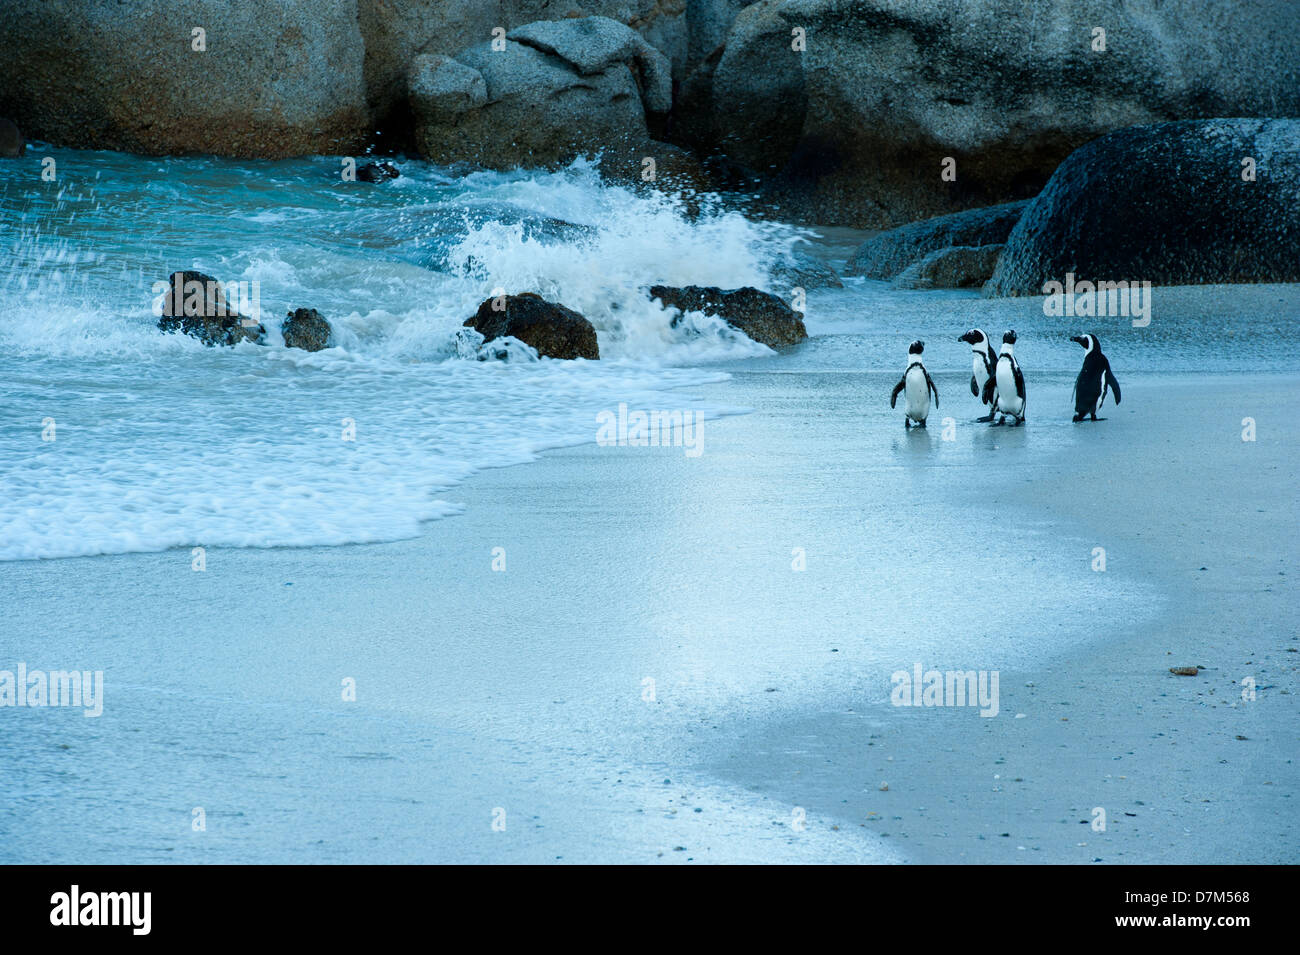 African penguins, Spheniscus demersus, Boulders Beach, Cape Peninsula, South Africa Stock Photo